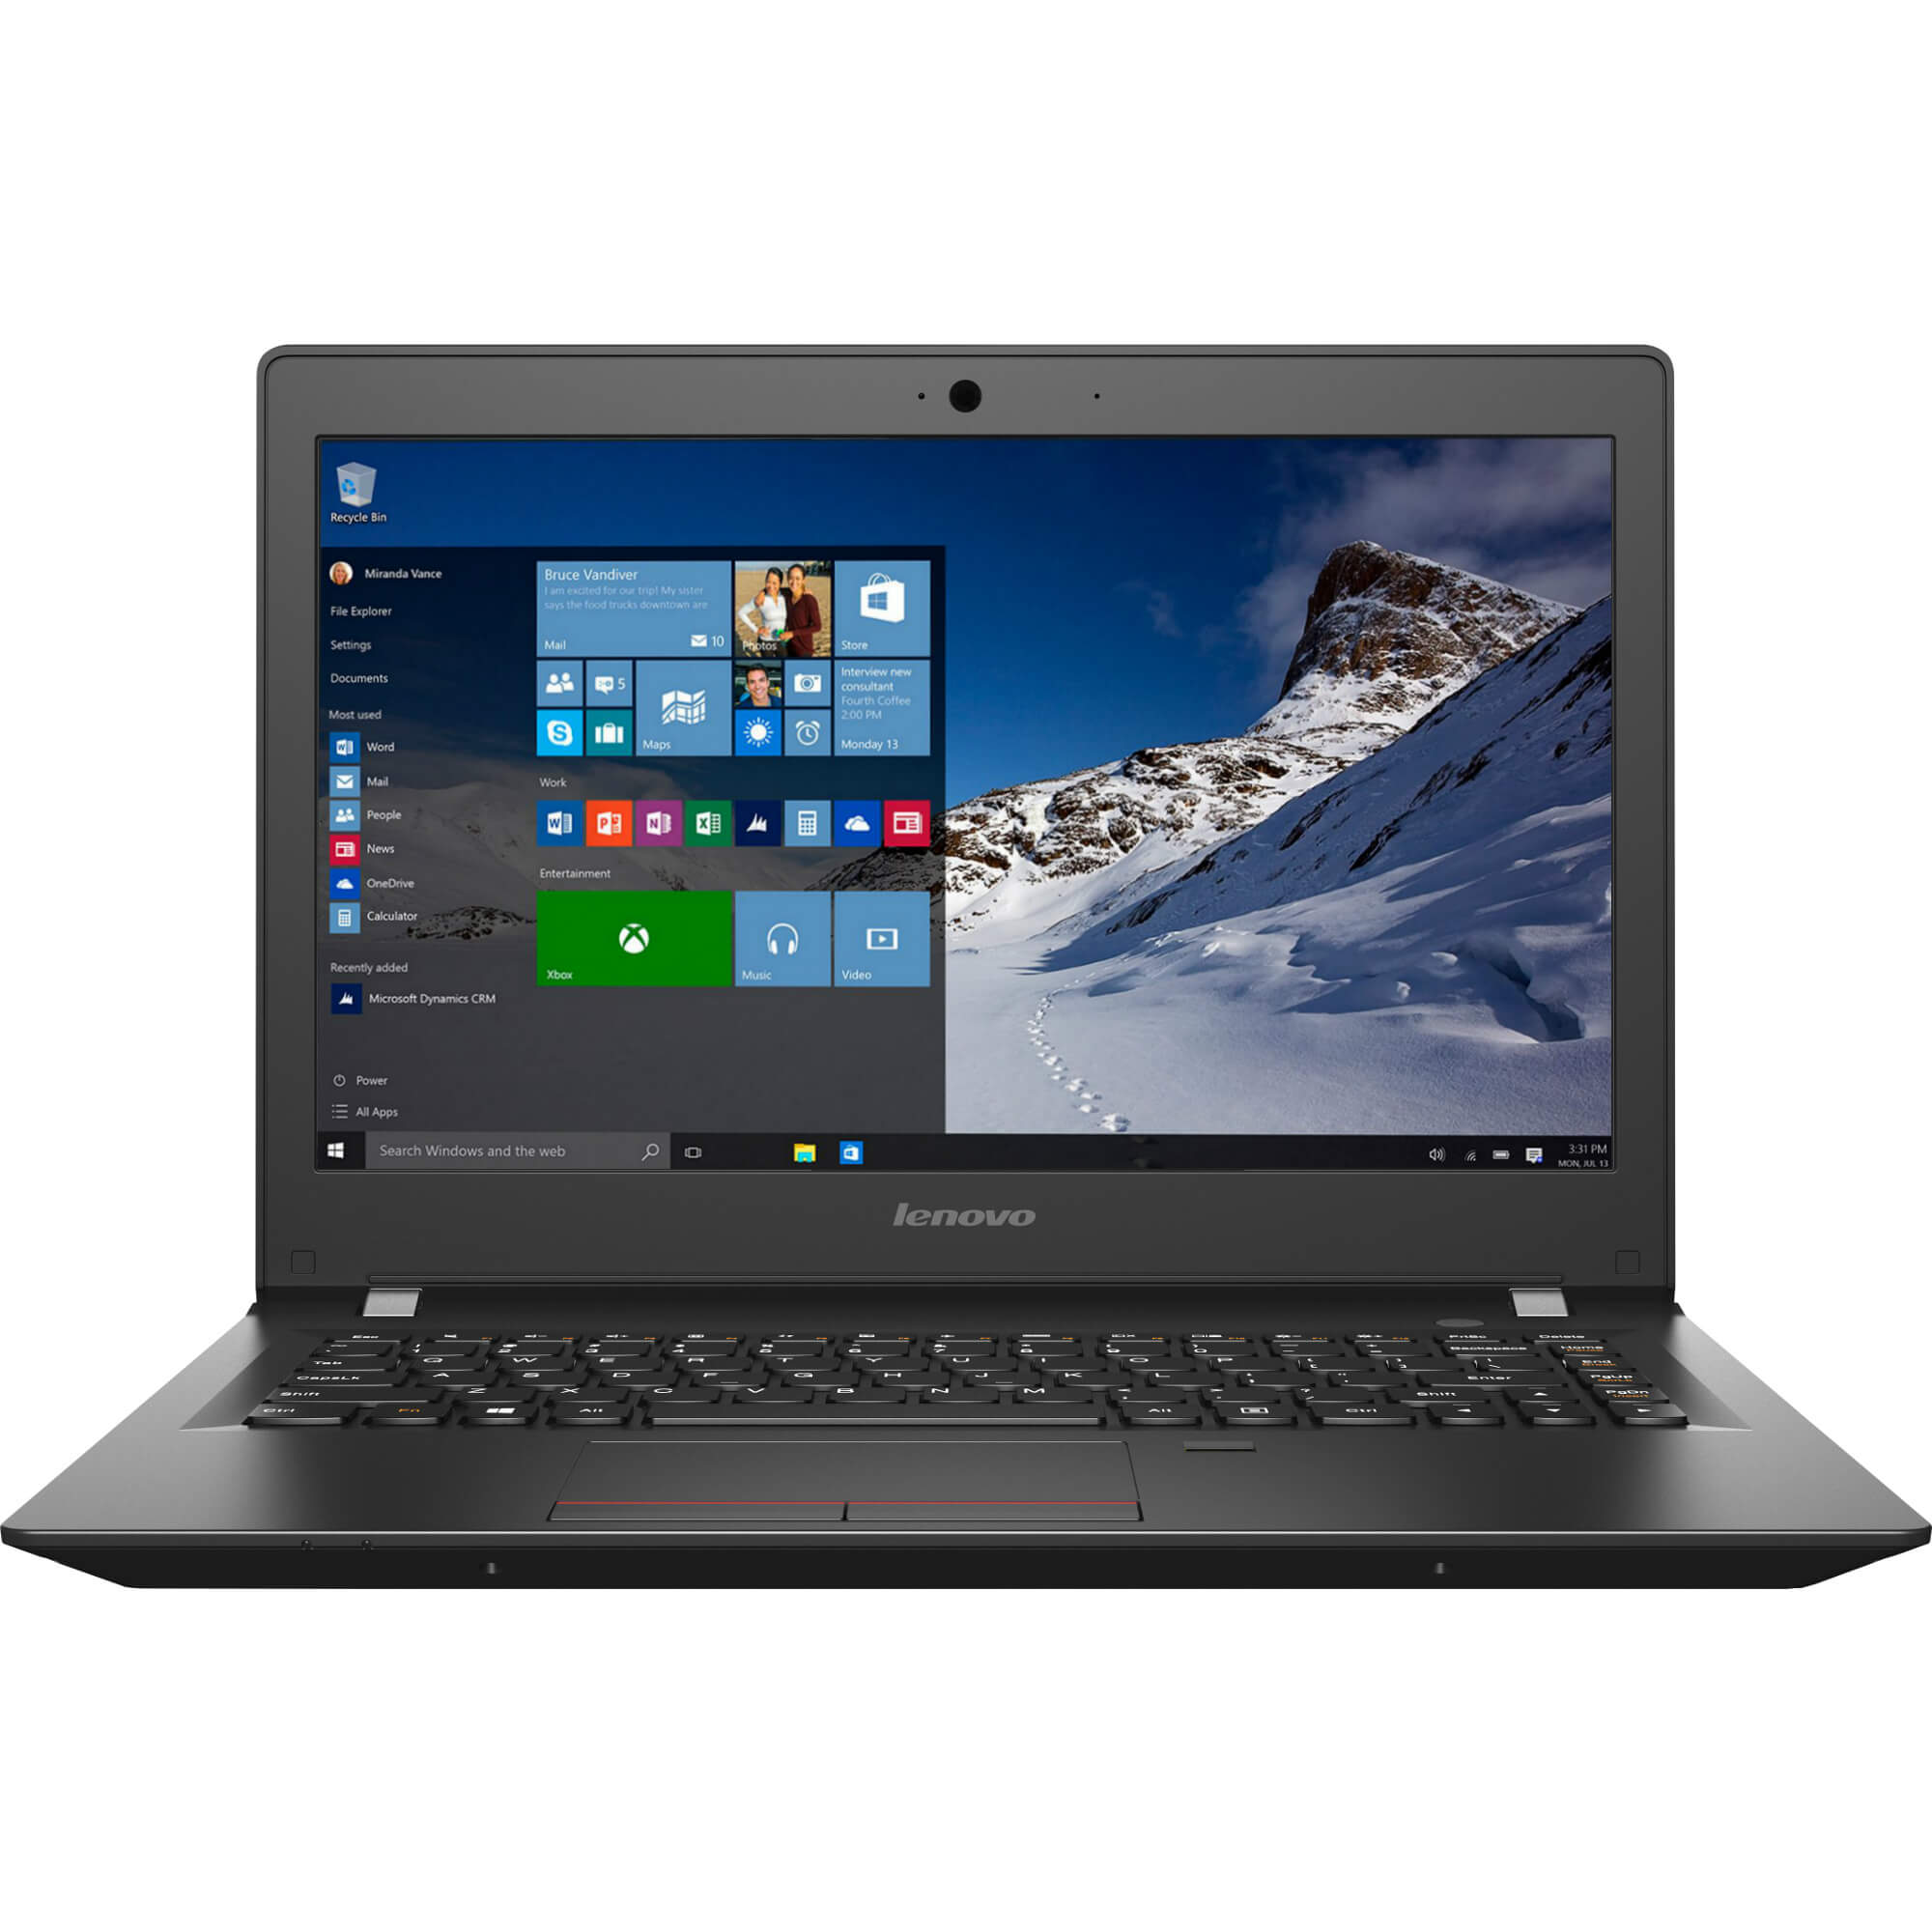  Laptop Lenovo E31-80, Intel Core i7-6500U, 4GB DDR3, SSD 256GB, Intel HD Graphics, Windows 10 Pro 